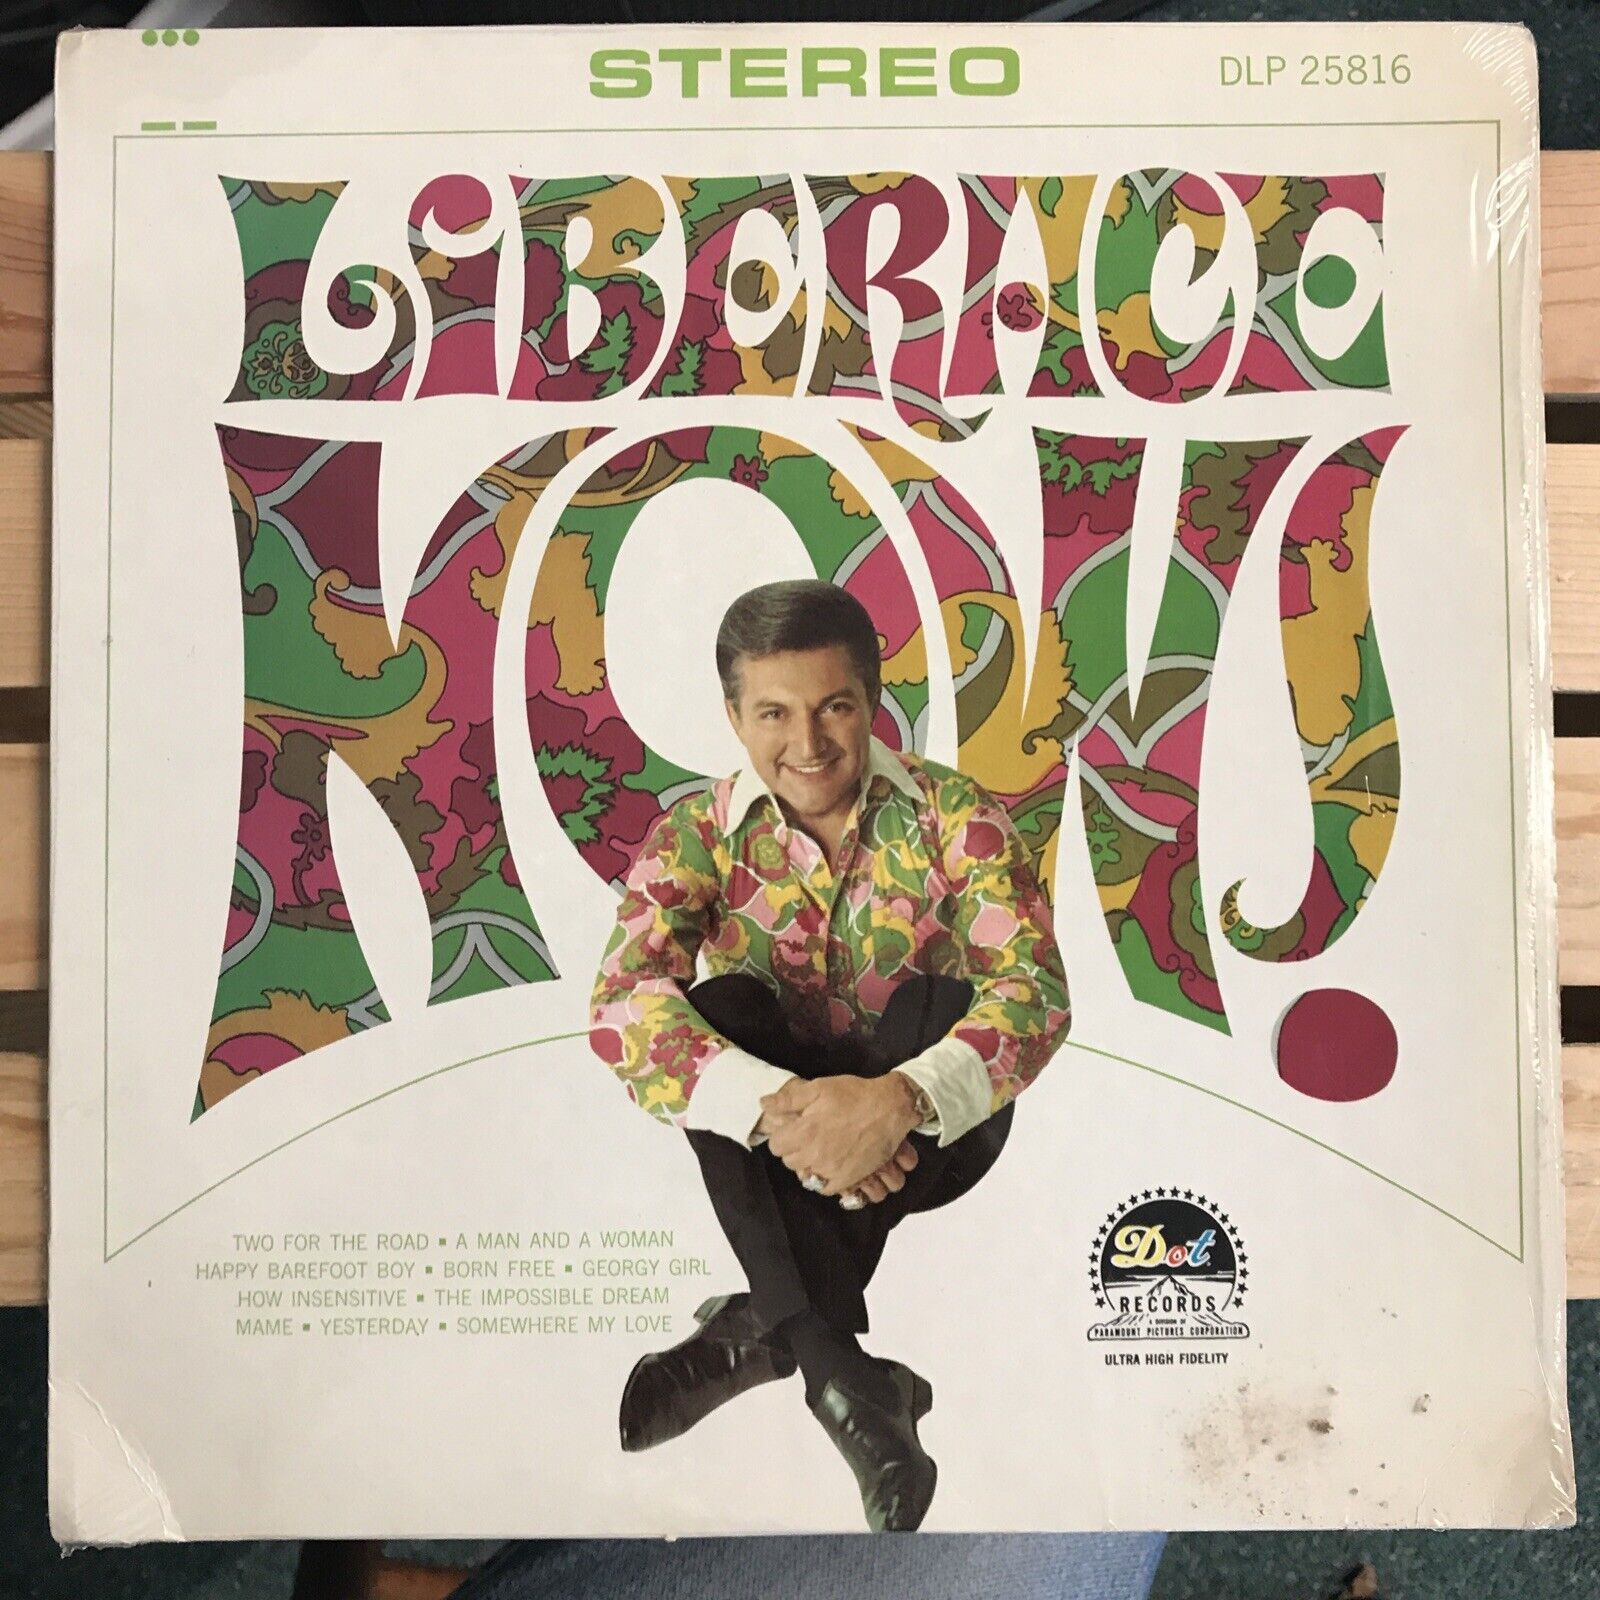 Liberace Now Dot Records DLP 25816 VTG Record Album NM VINYL. SHRINK